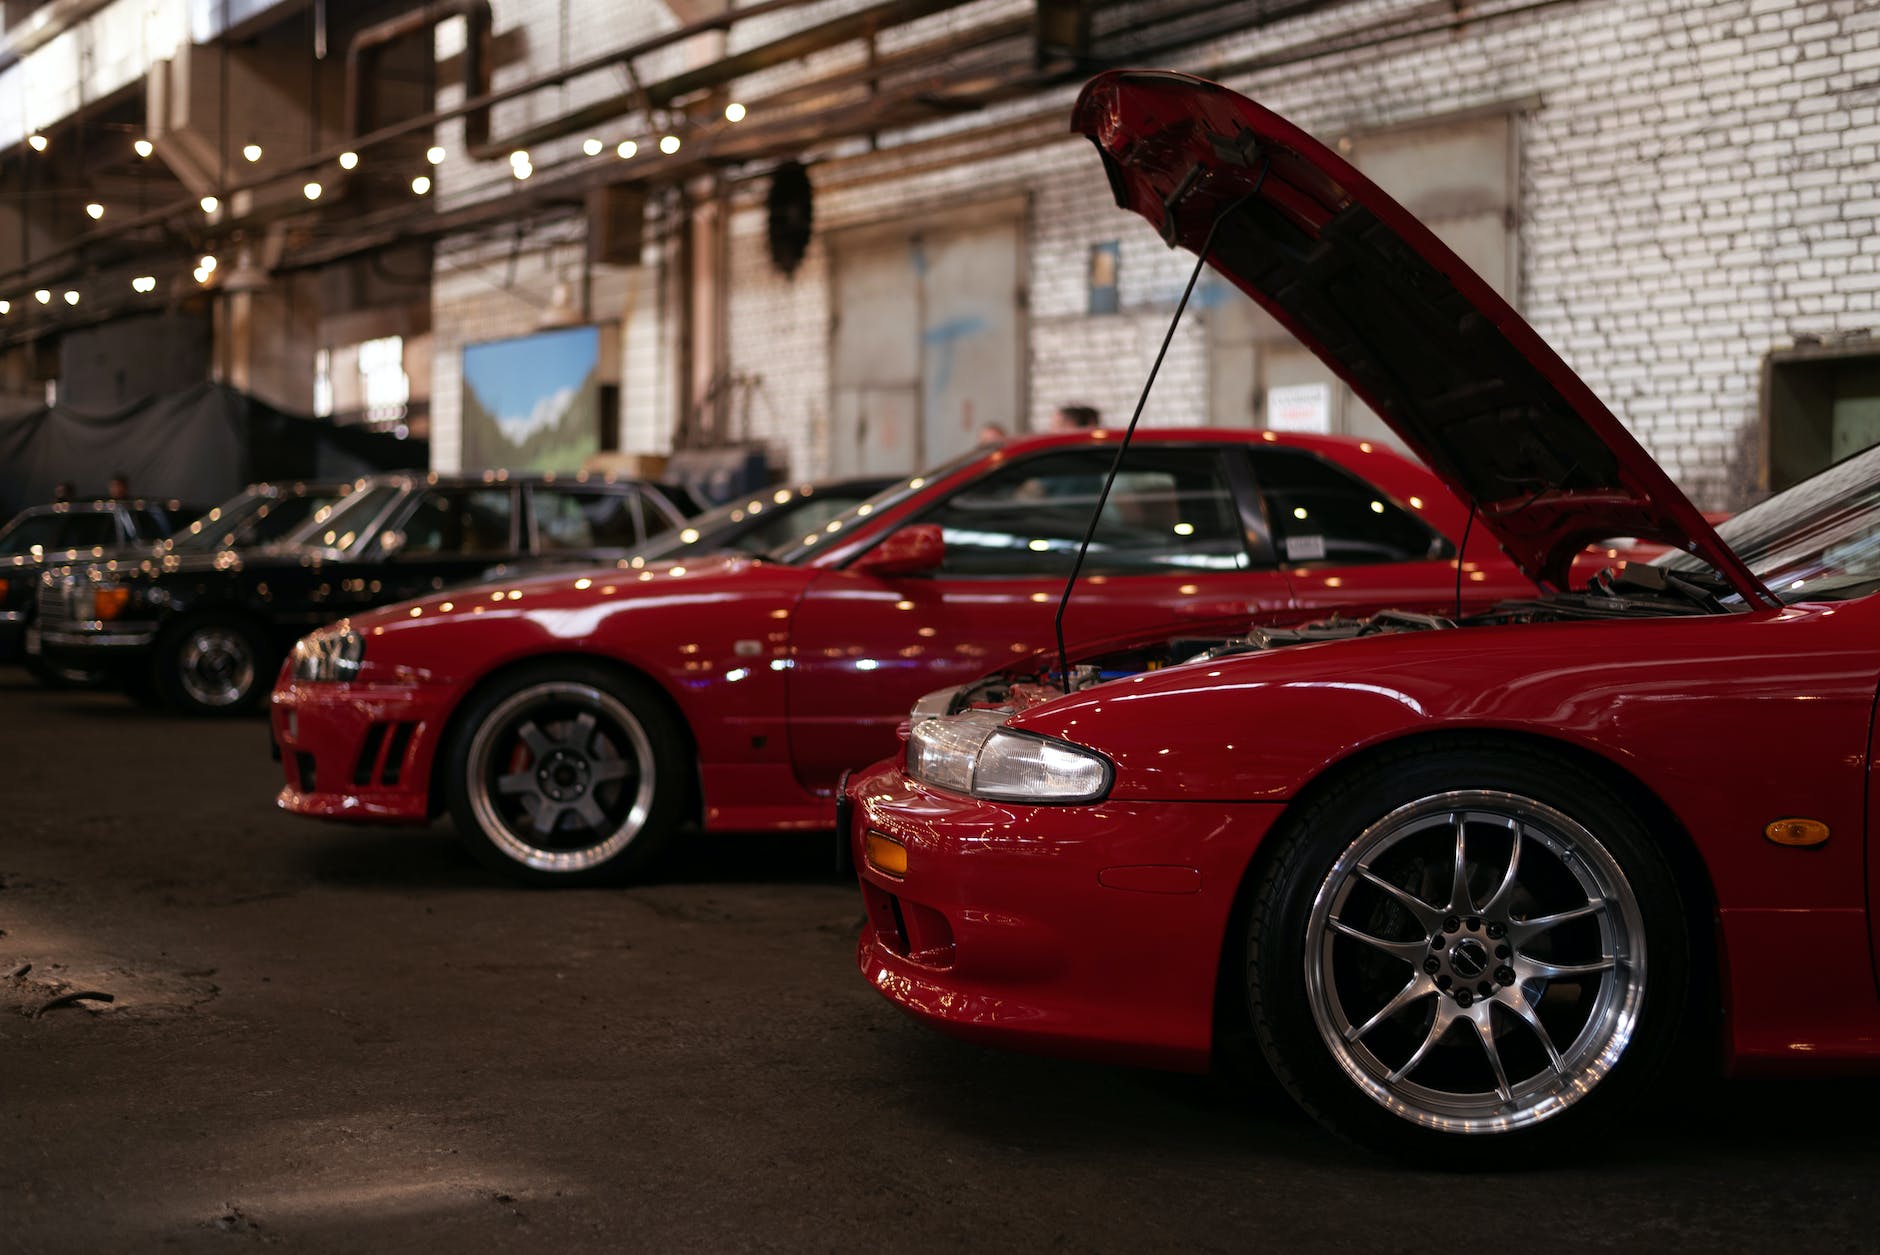 drift cars on a car meet in a garage